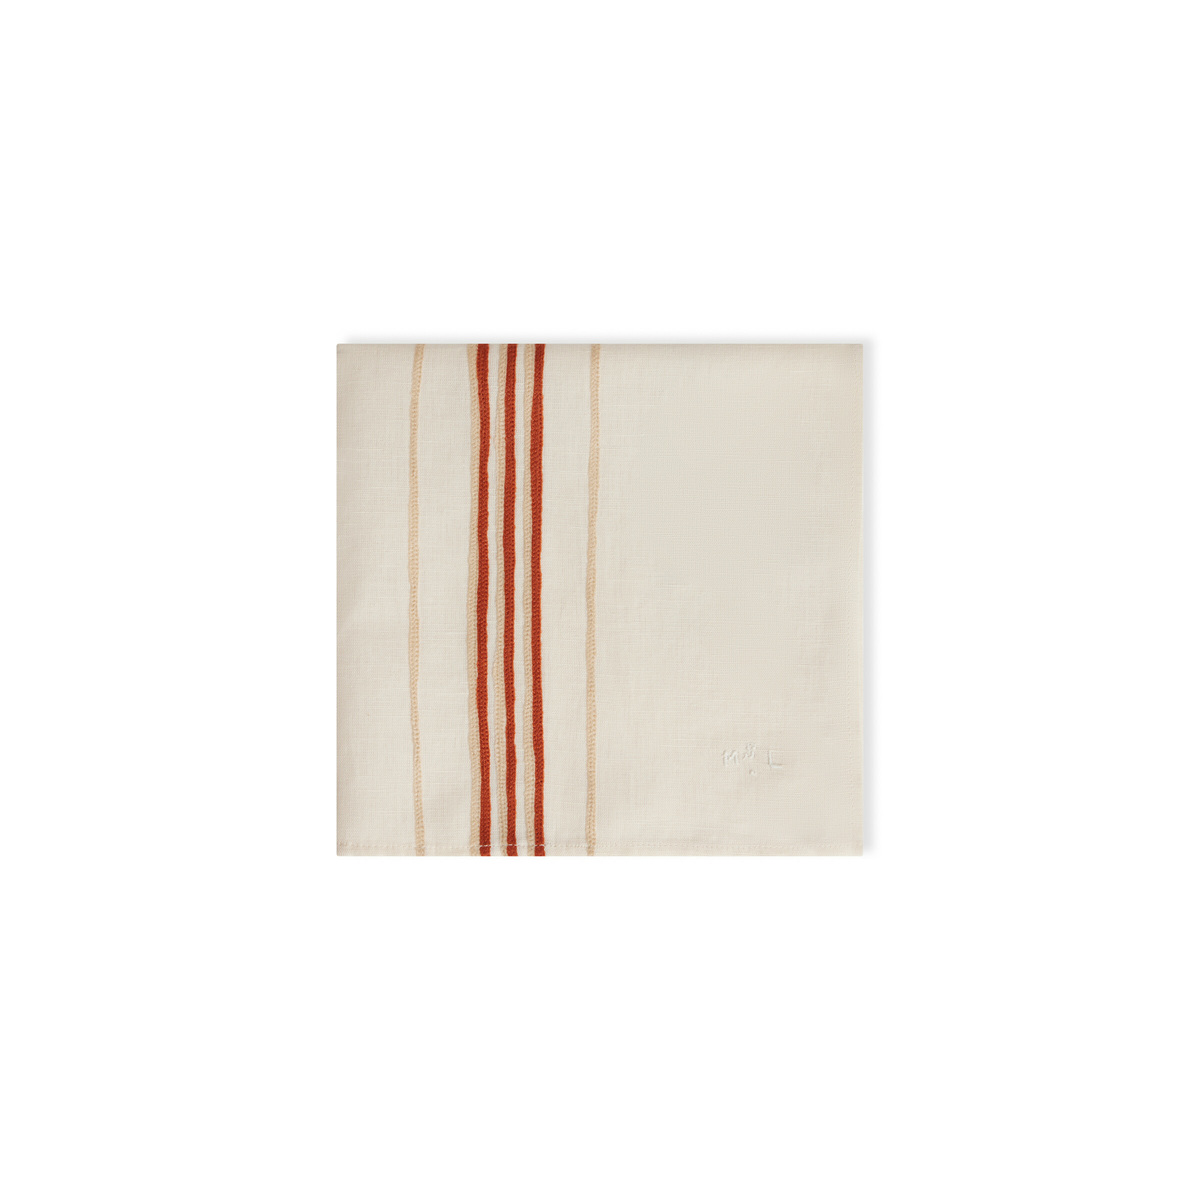 Napkin Echo, Off-White/Terracota- 45 x 45 cm - Linen / Cotton - image 1